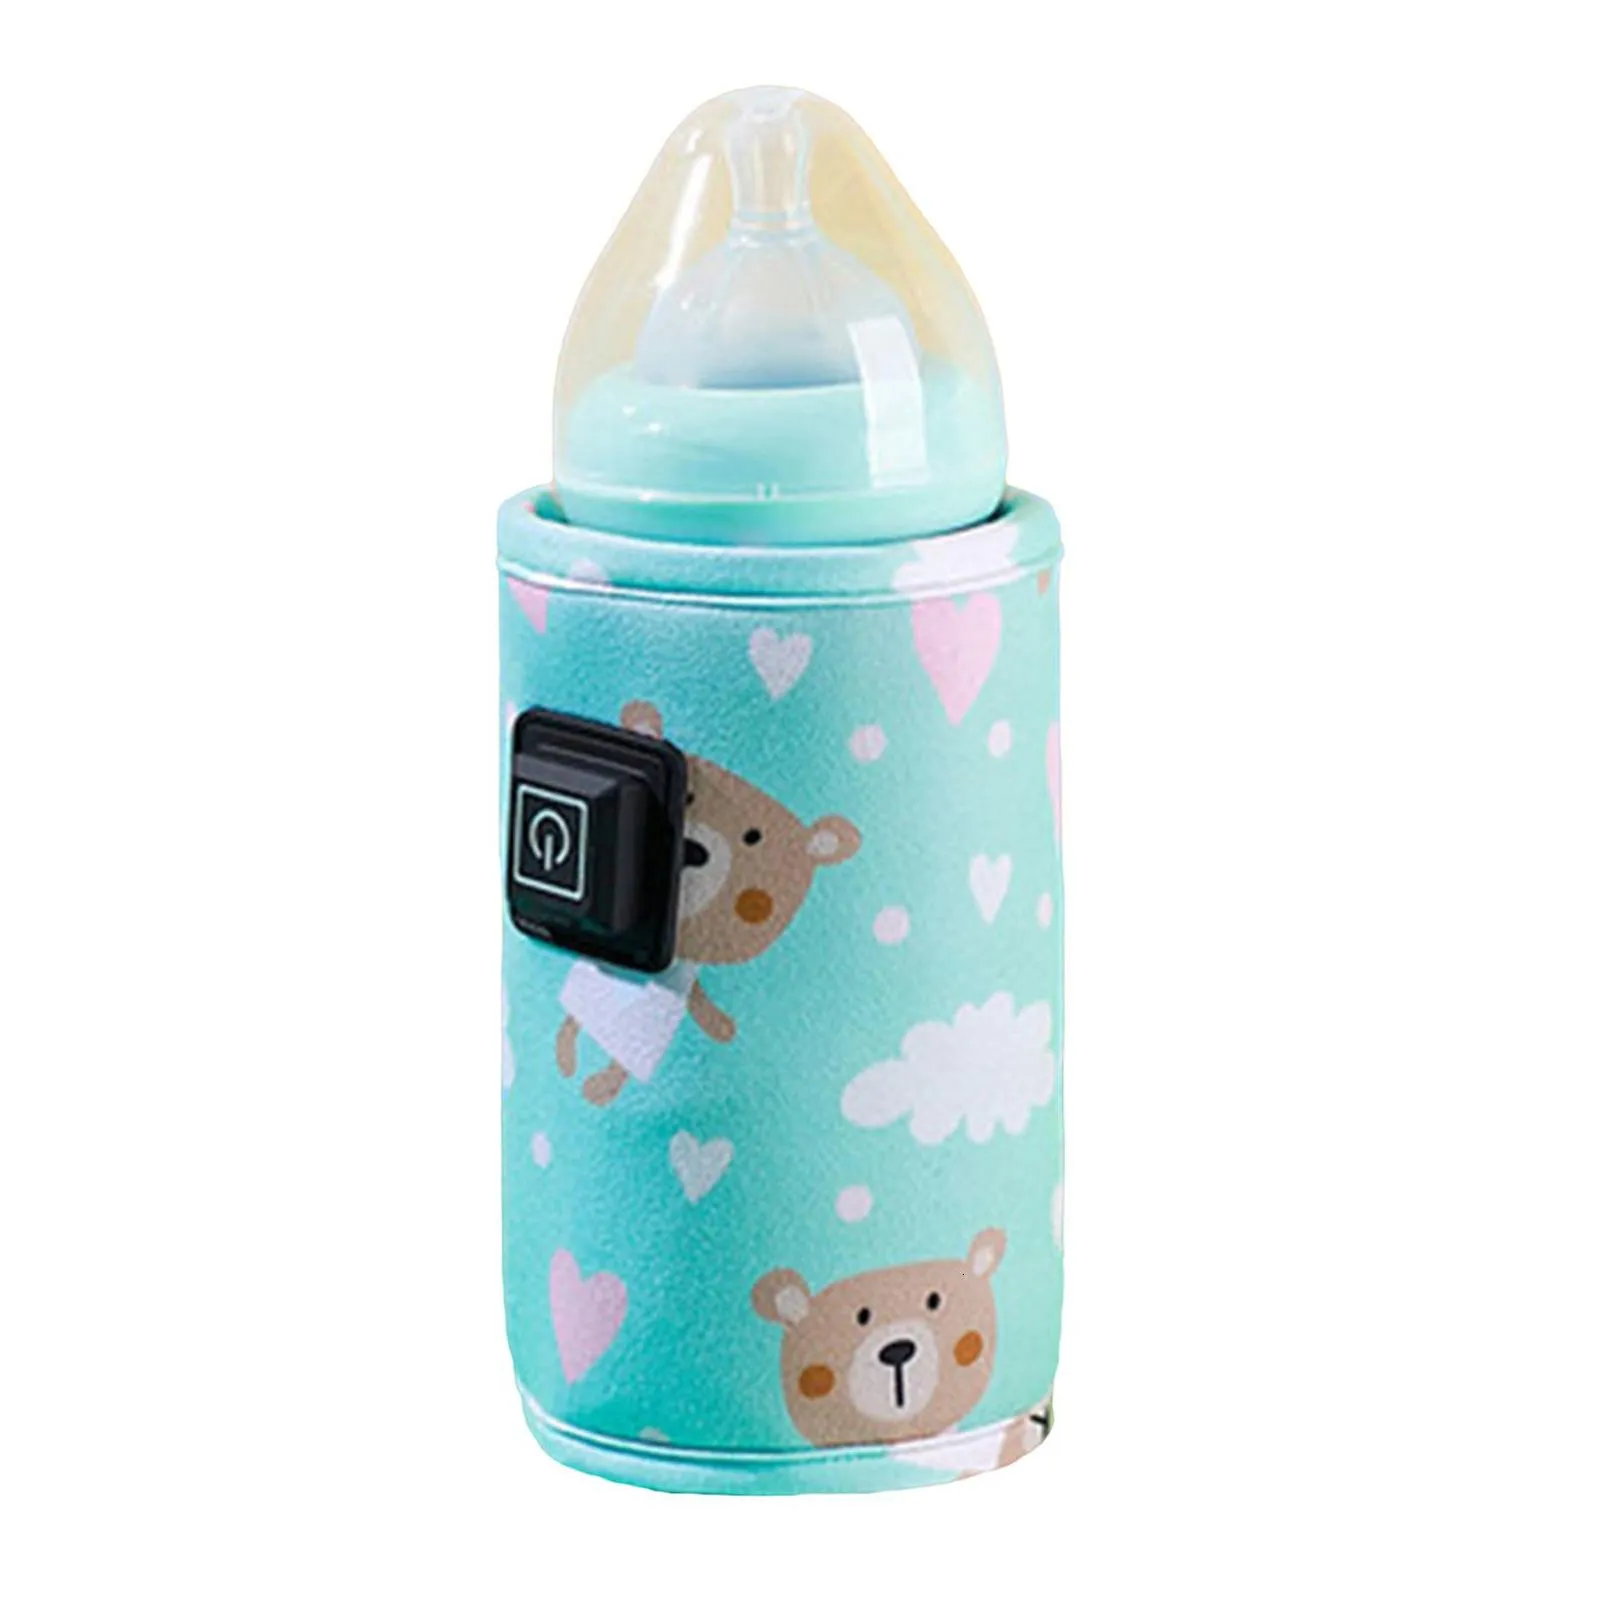 Bottle Warmers&Sterilizers# Bottle Warmers Sterilizers Usb Milk Water Warmer Travel Stroller Insated Bag Baby Nursing Heater Safe Kids Dh0On